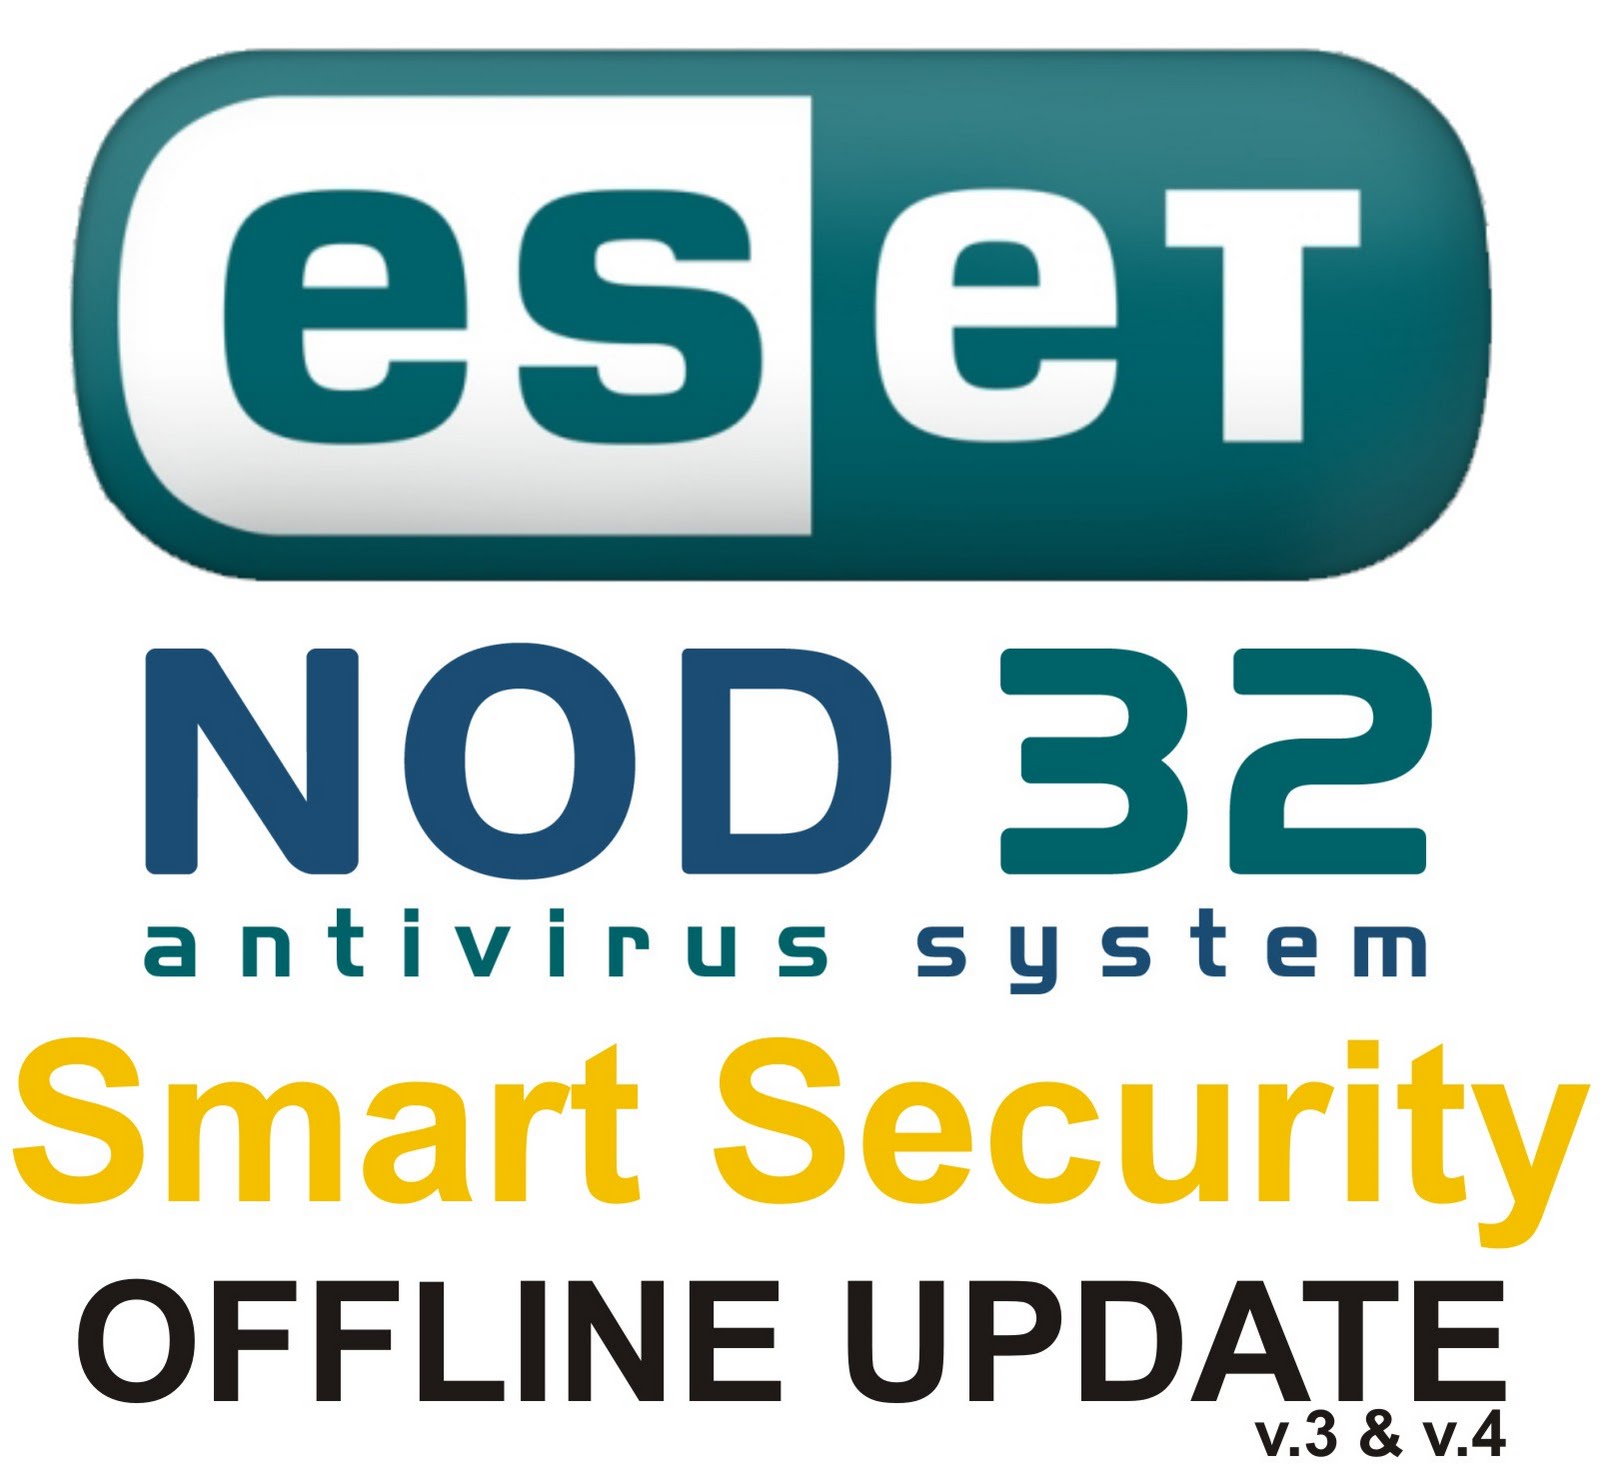 Eset offline. НОД 32 антивирус оффлайн обновления базы.